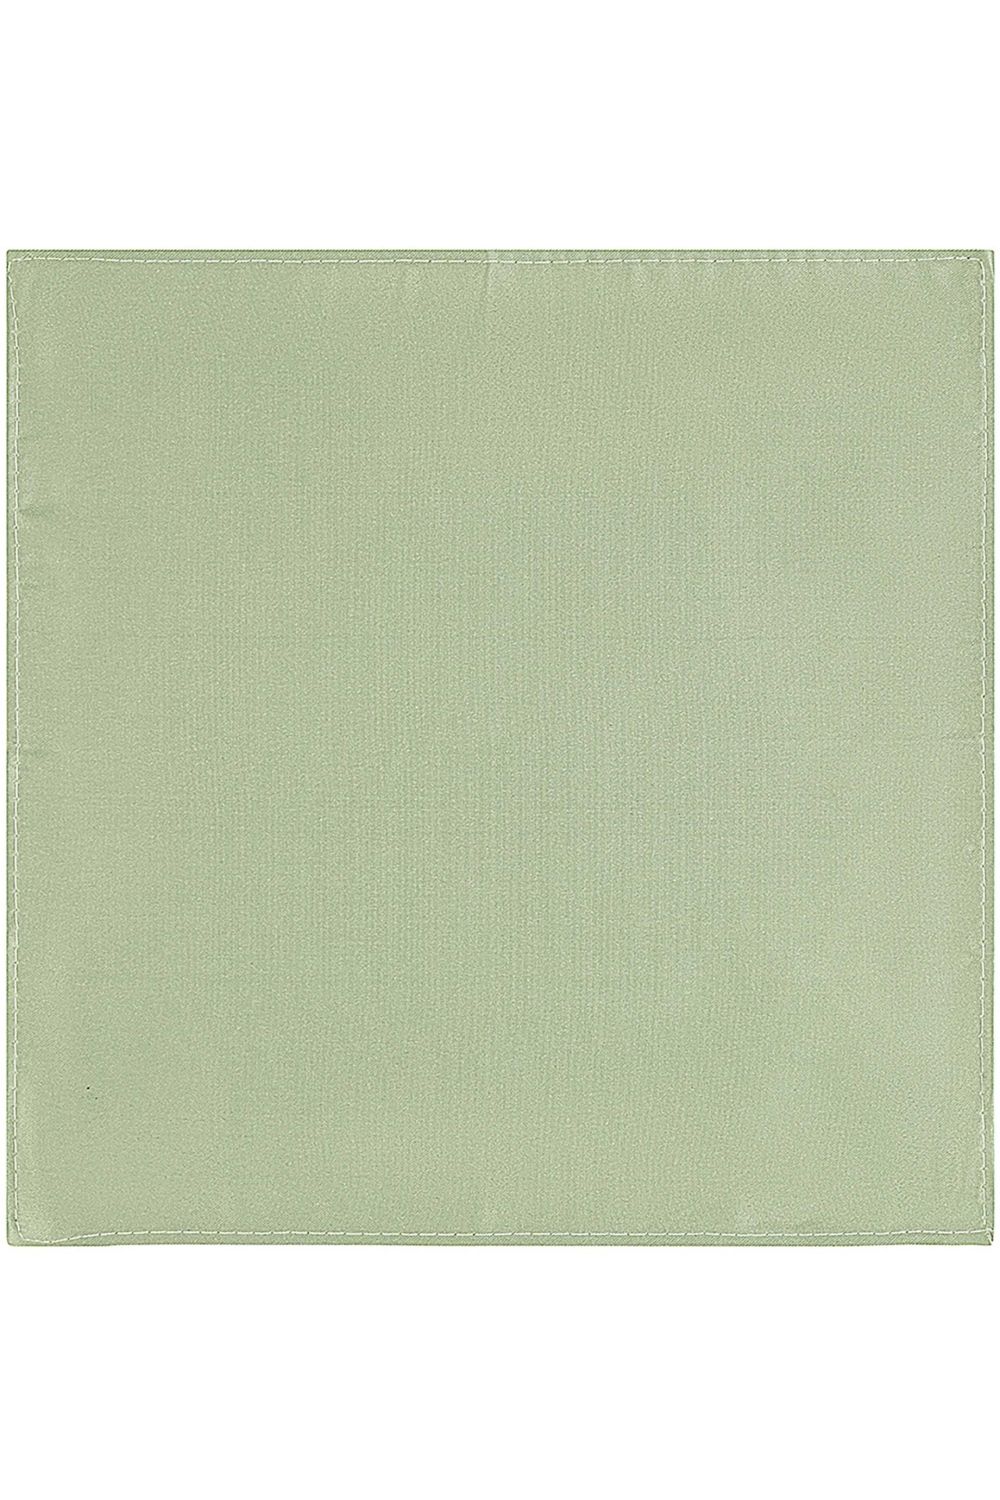 Plain Pastel green satin classic mens  bow tie & pocket square set